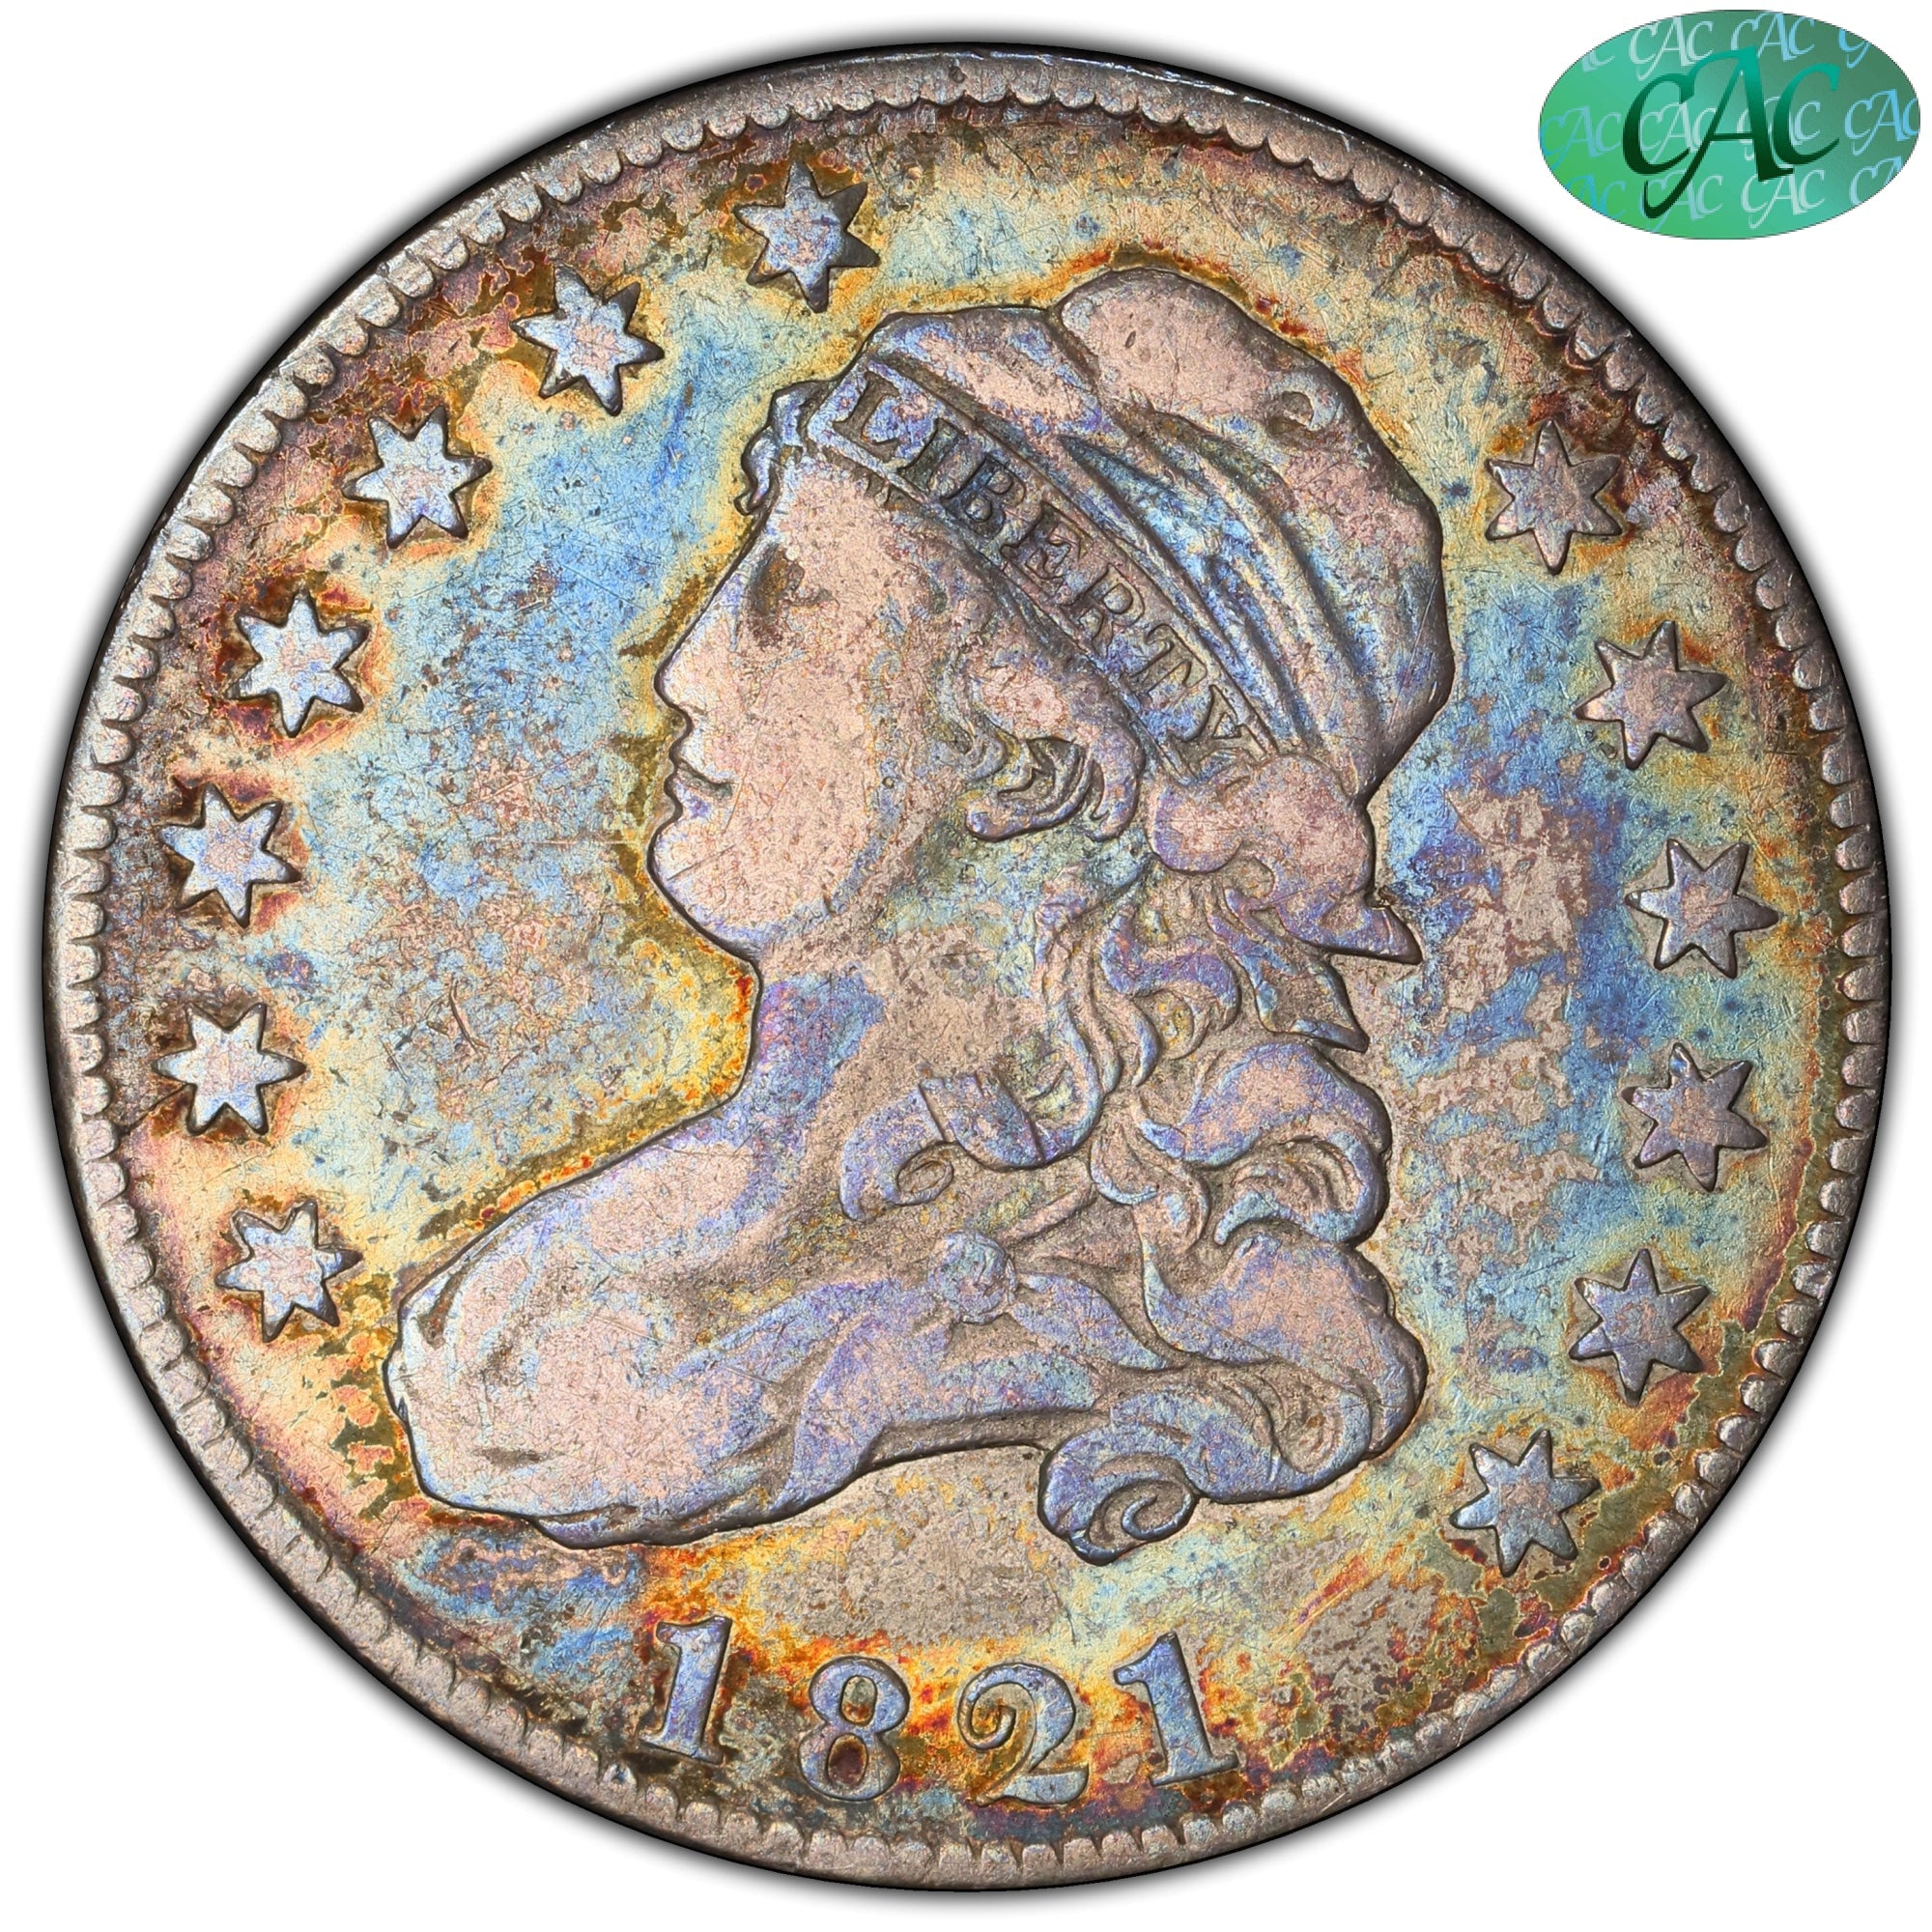 1821 25C B-5 VF20 PCGS CAC - Paradime Coins | PCGS NGC CACG CAC Rare US Numismatic Coins For Sale